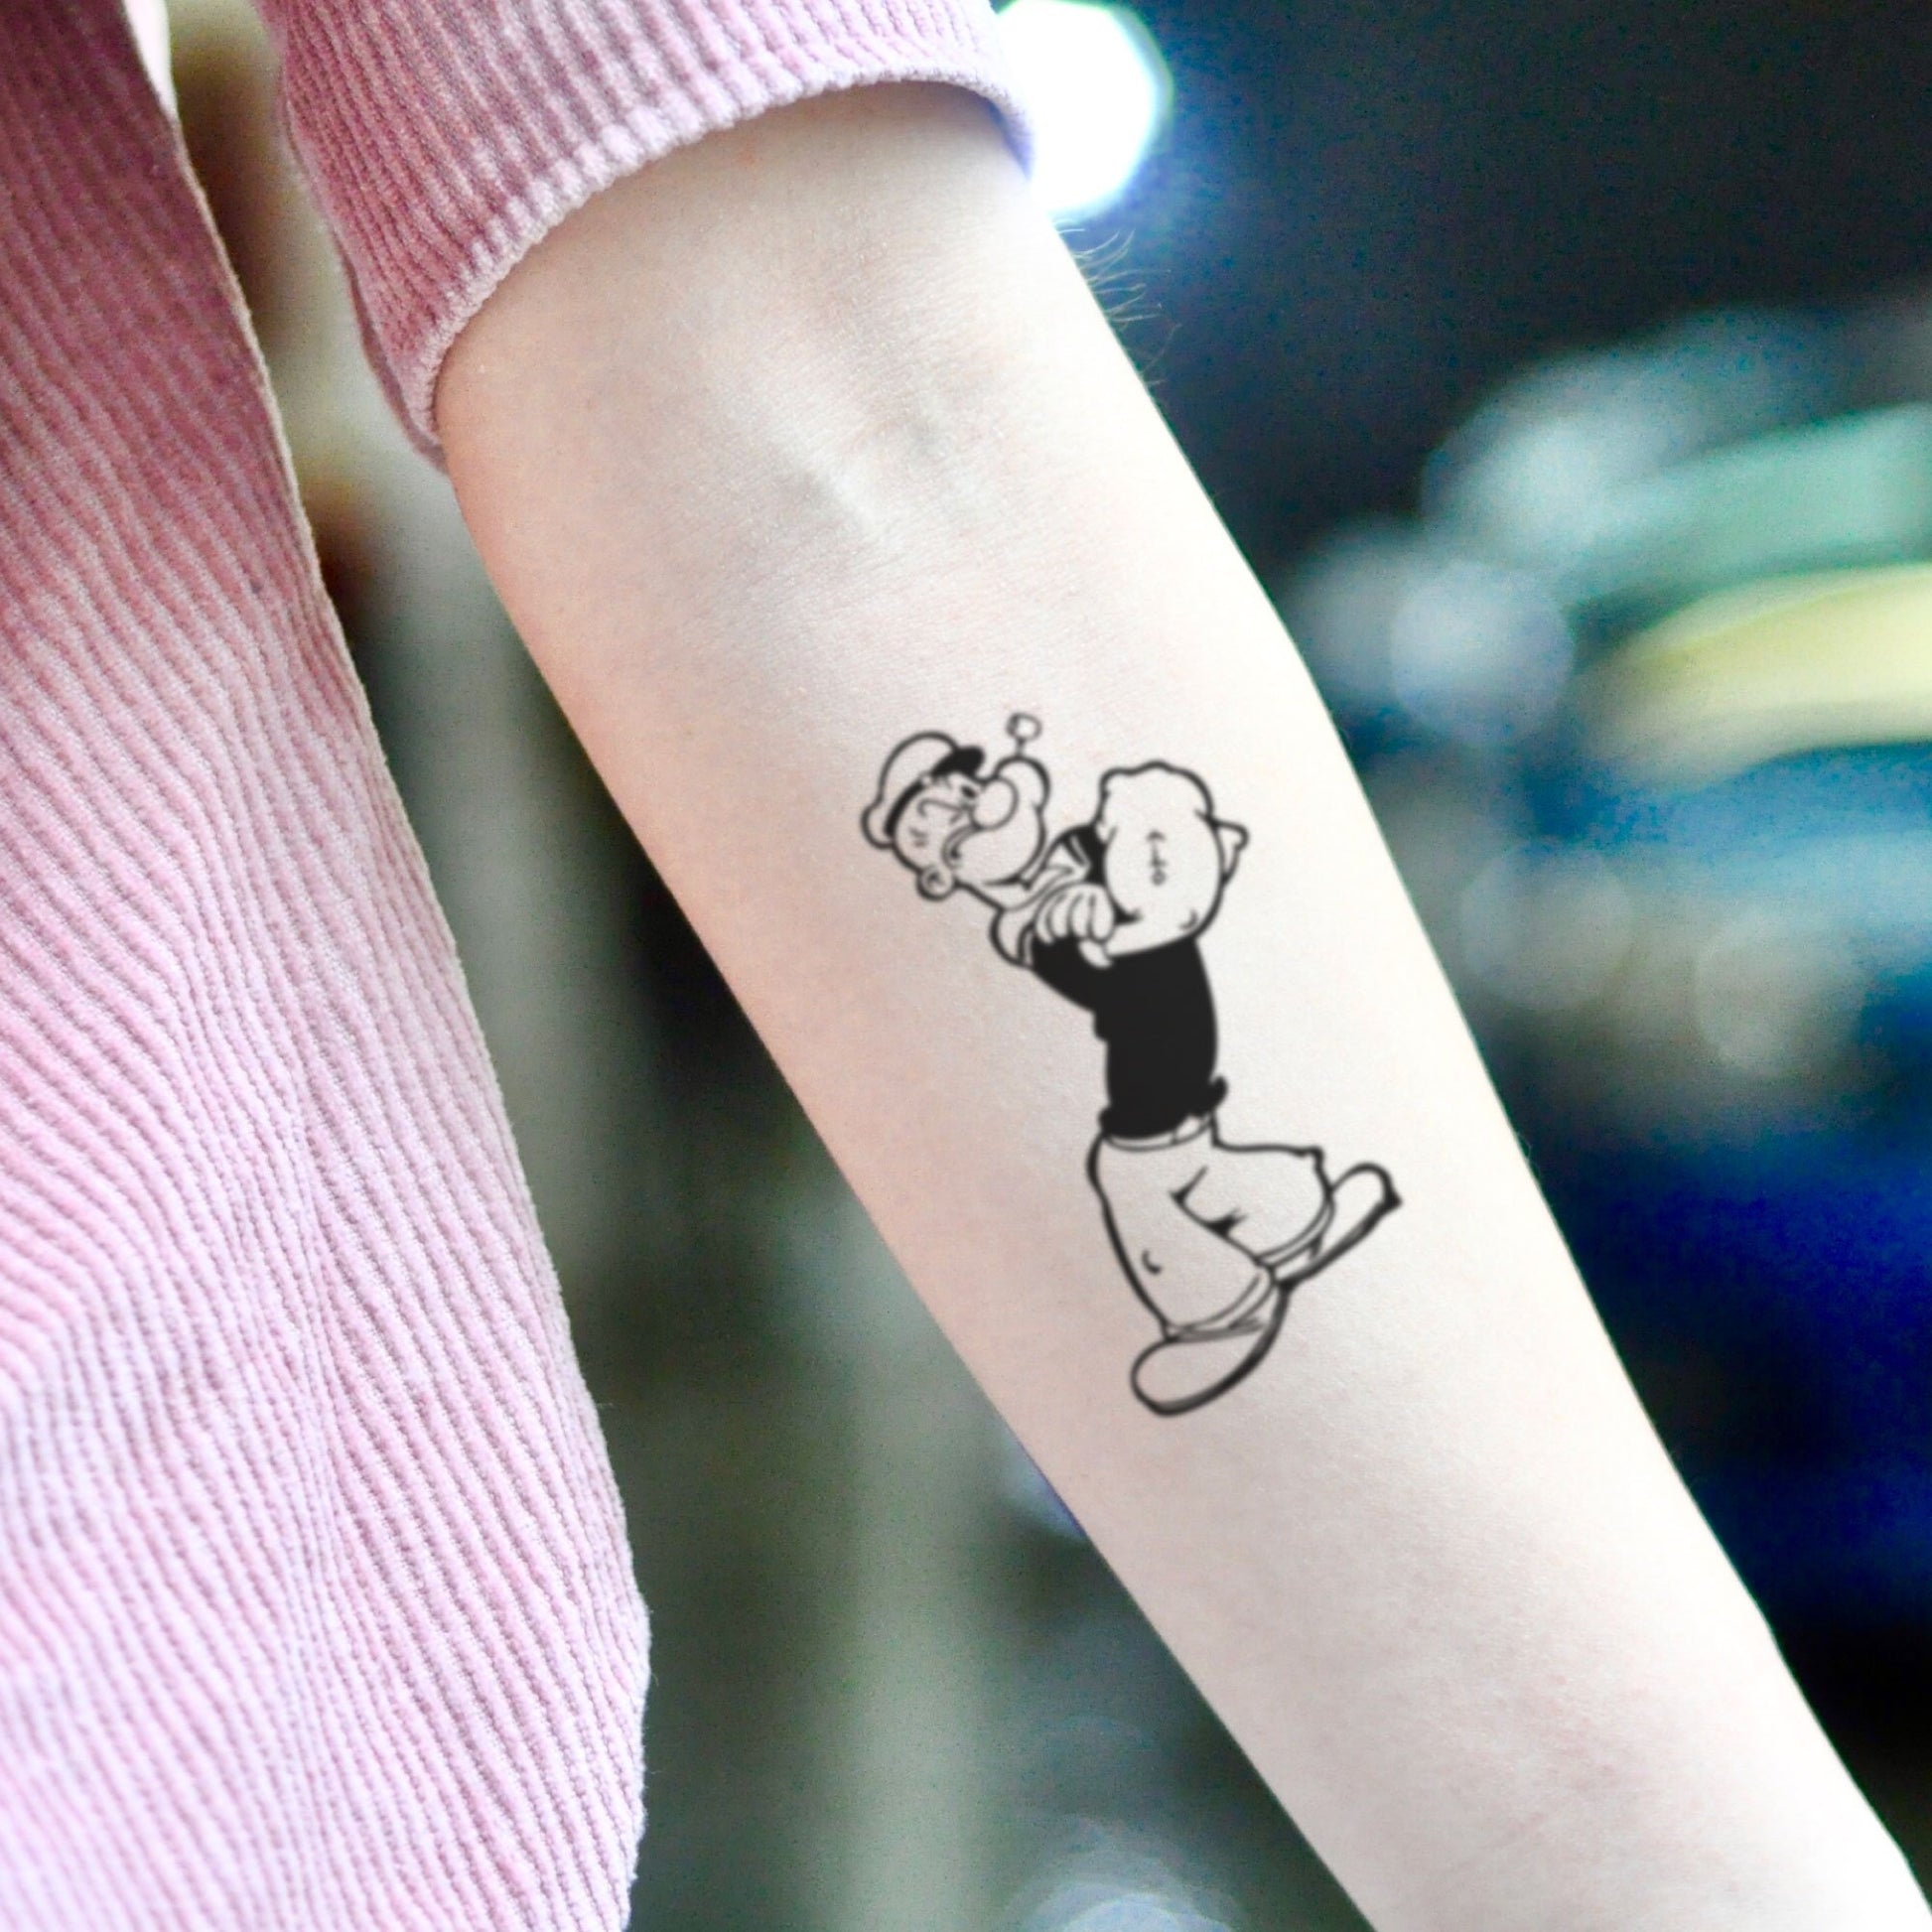 fake small popeye anchor drawing cartoon temporary tattoo sticker design idea on inner arm